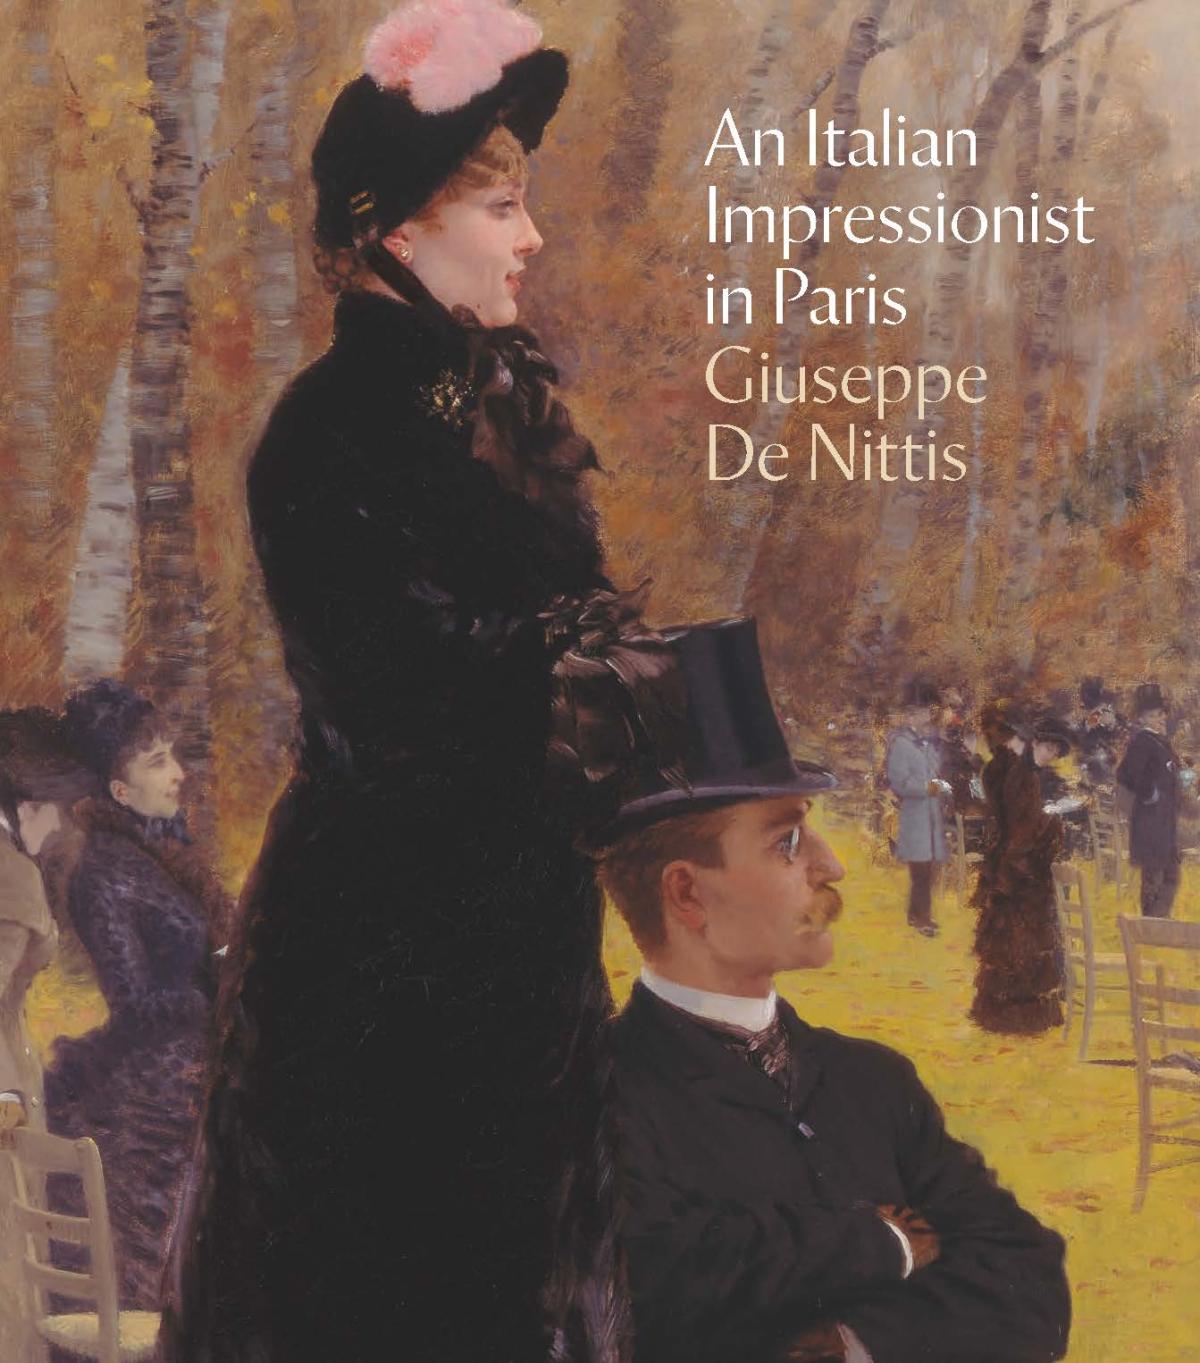 An Italian Impressionist in Paris: Giuseppe De Nittis exhibition catalogue cover